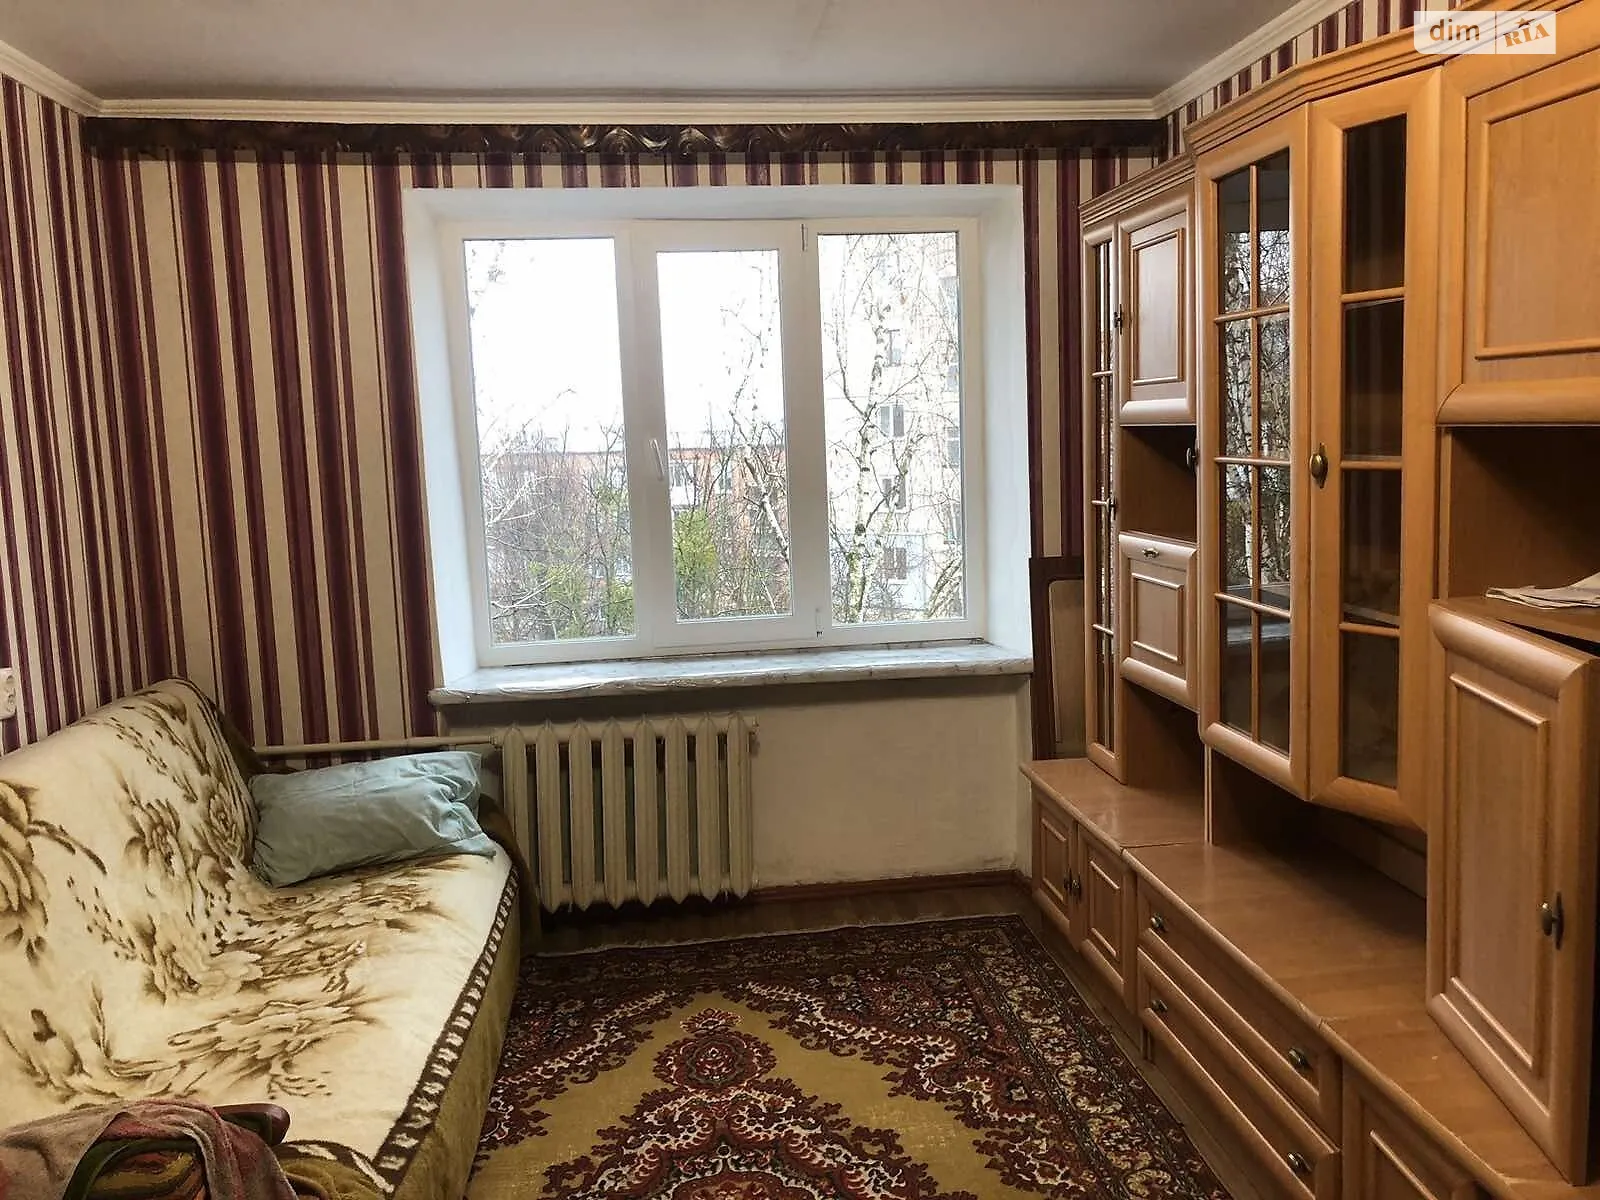 Продается комната 23 кв. м в Ровно - фото 3